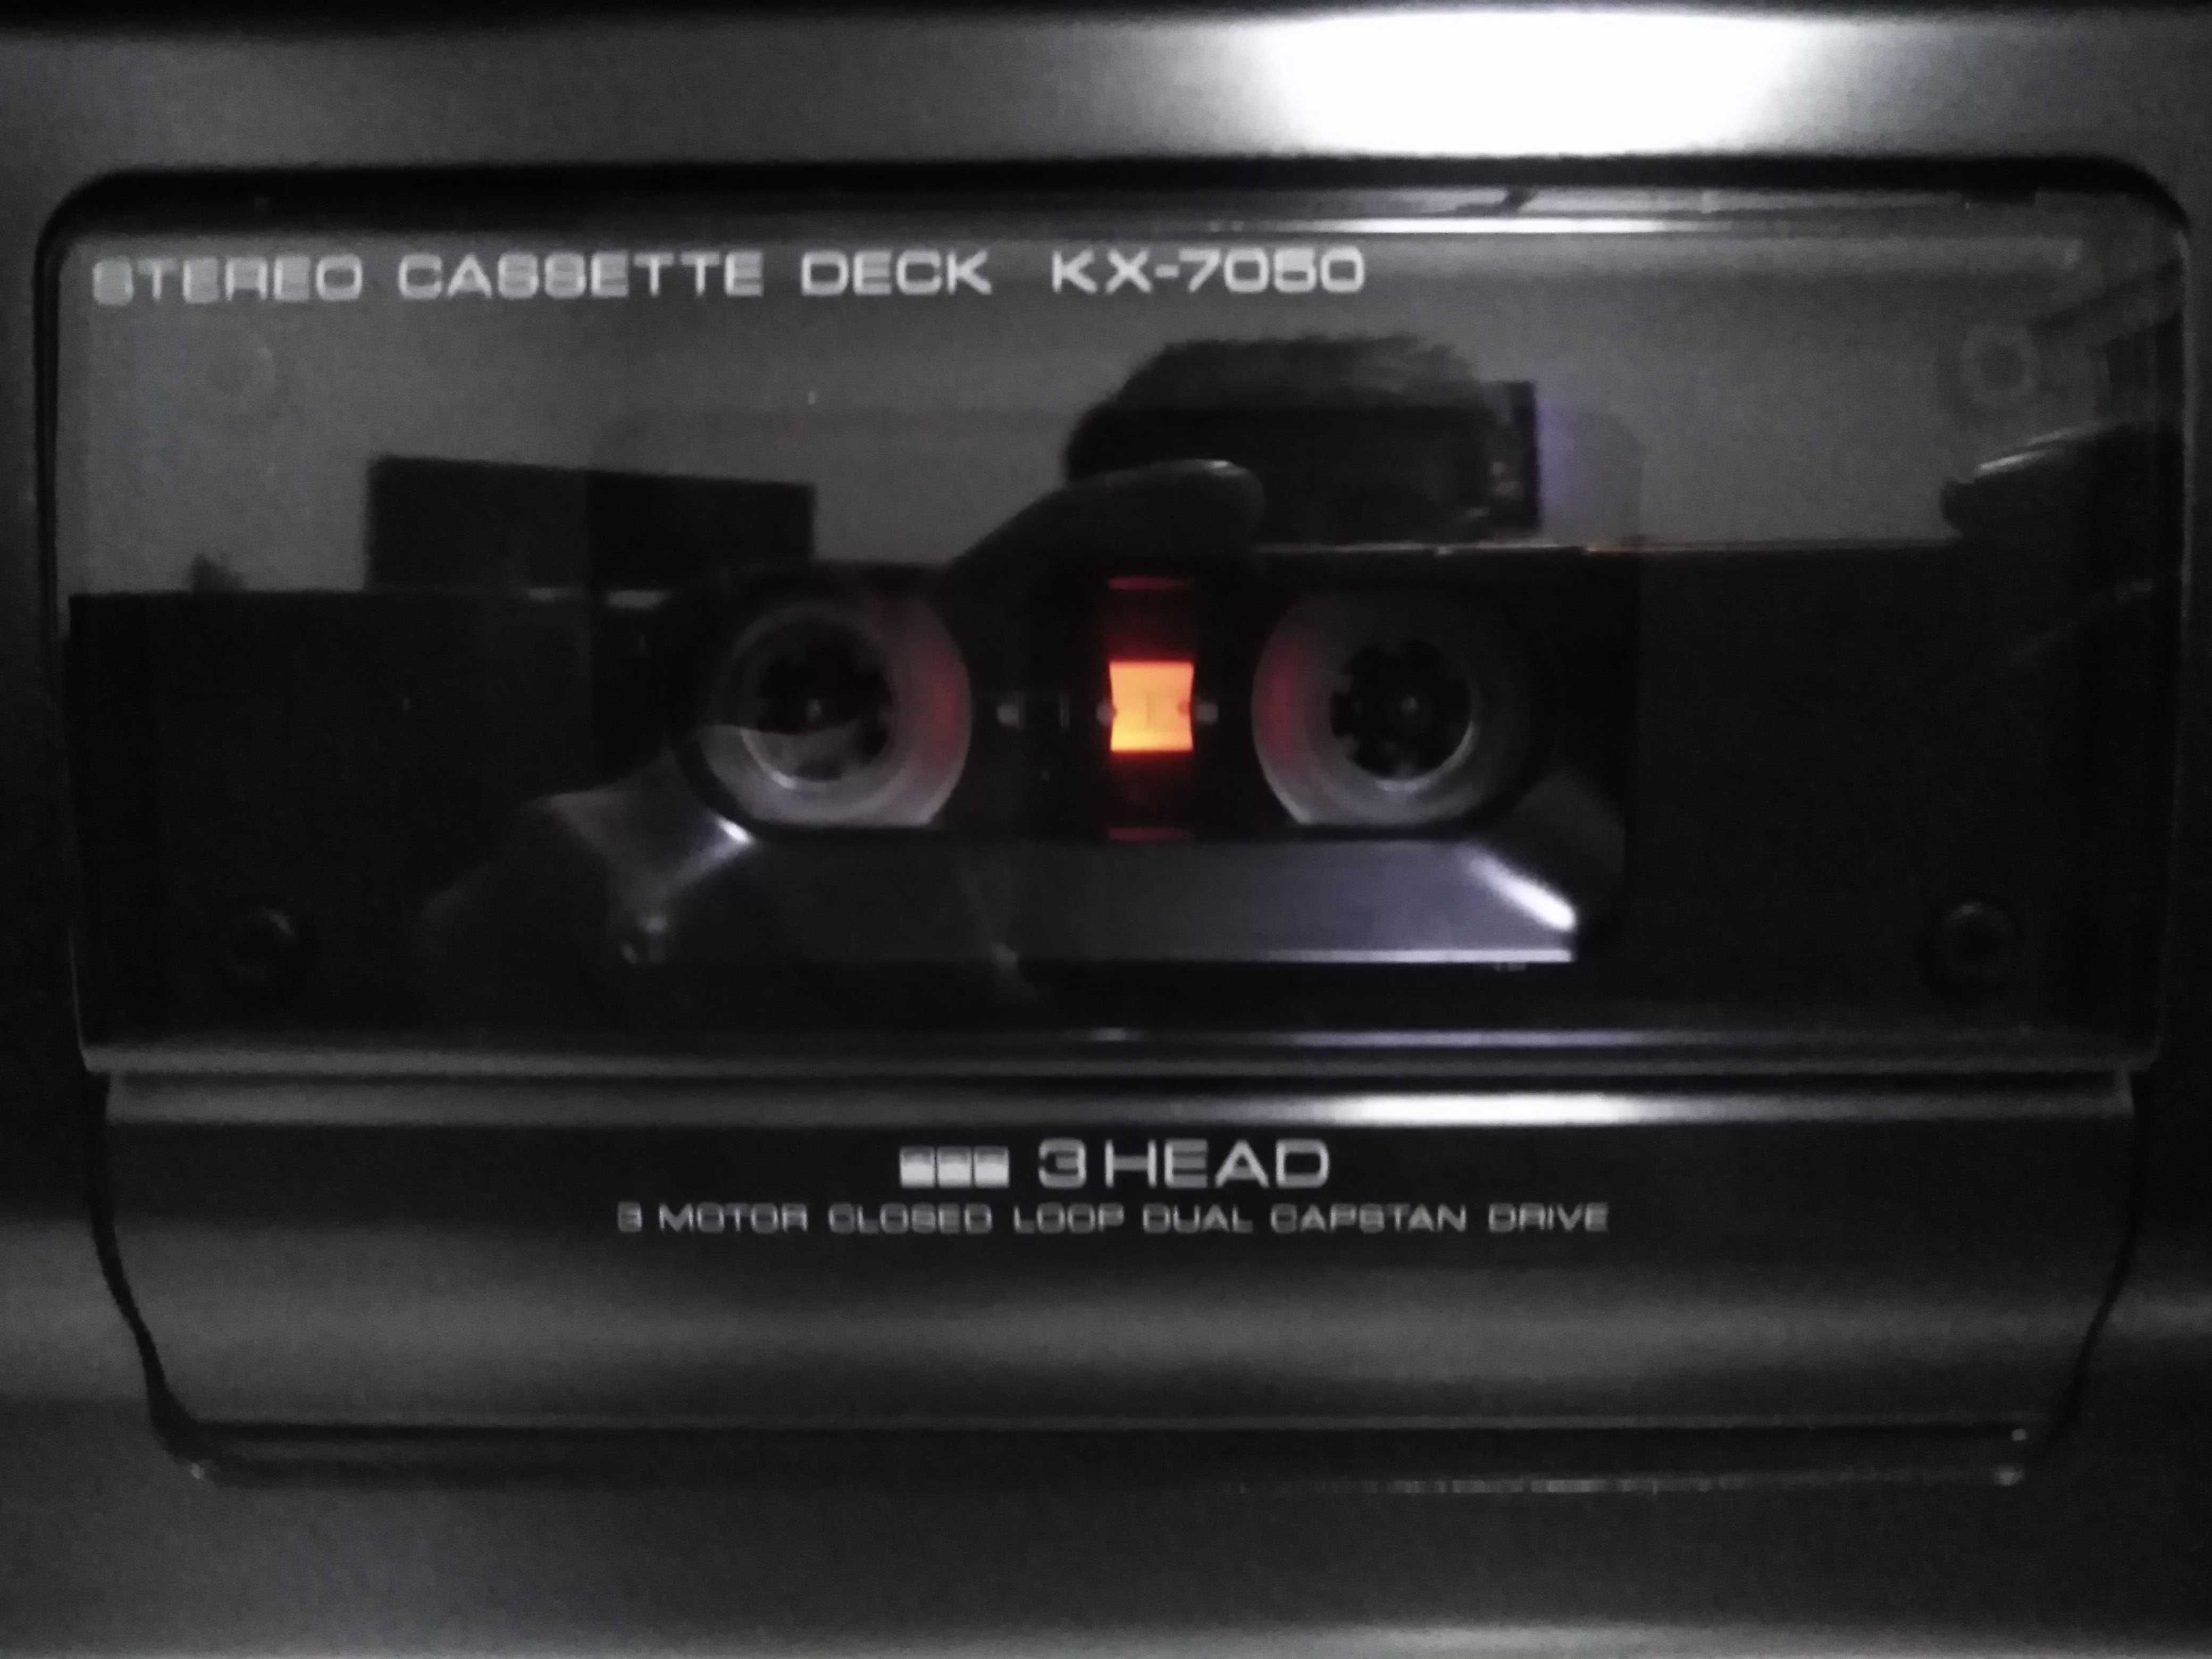 cd dublu recorder philips cdr 775 kenwood deck kx 7050